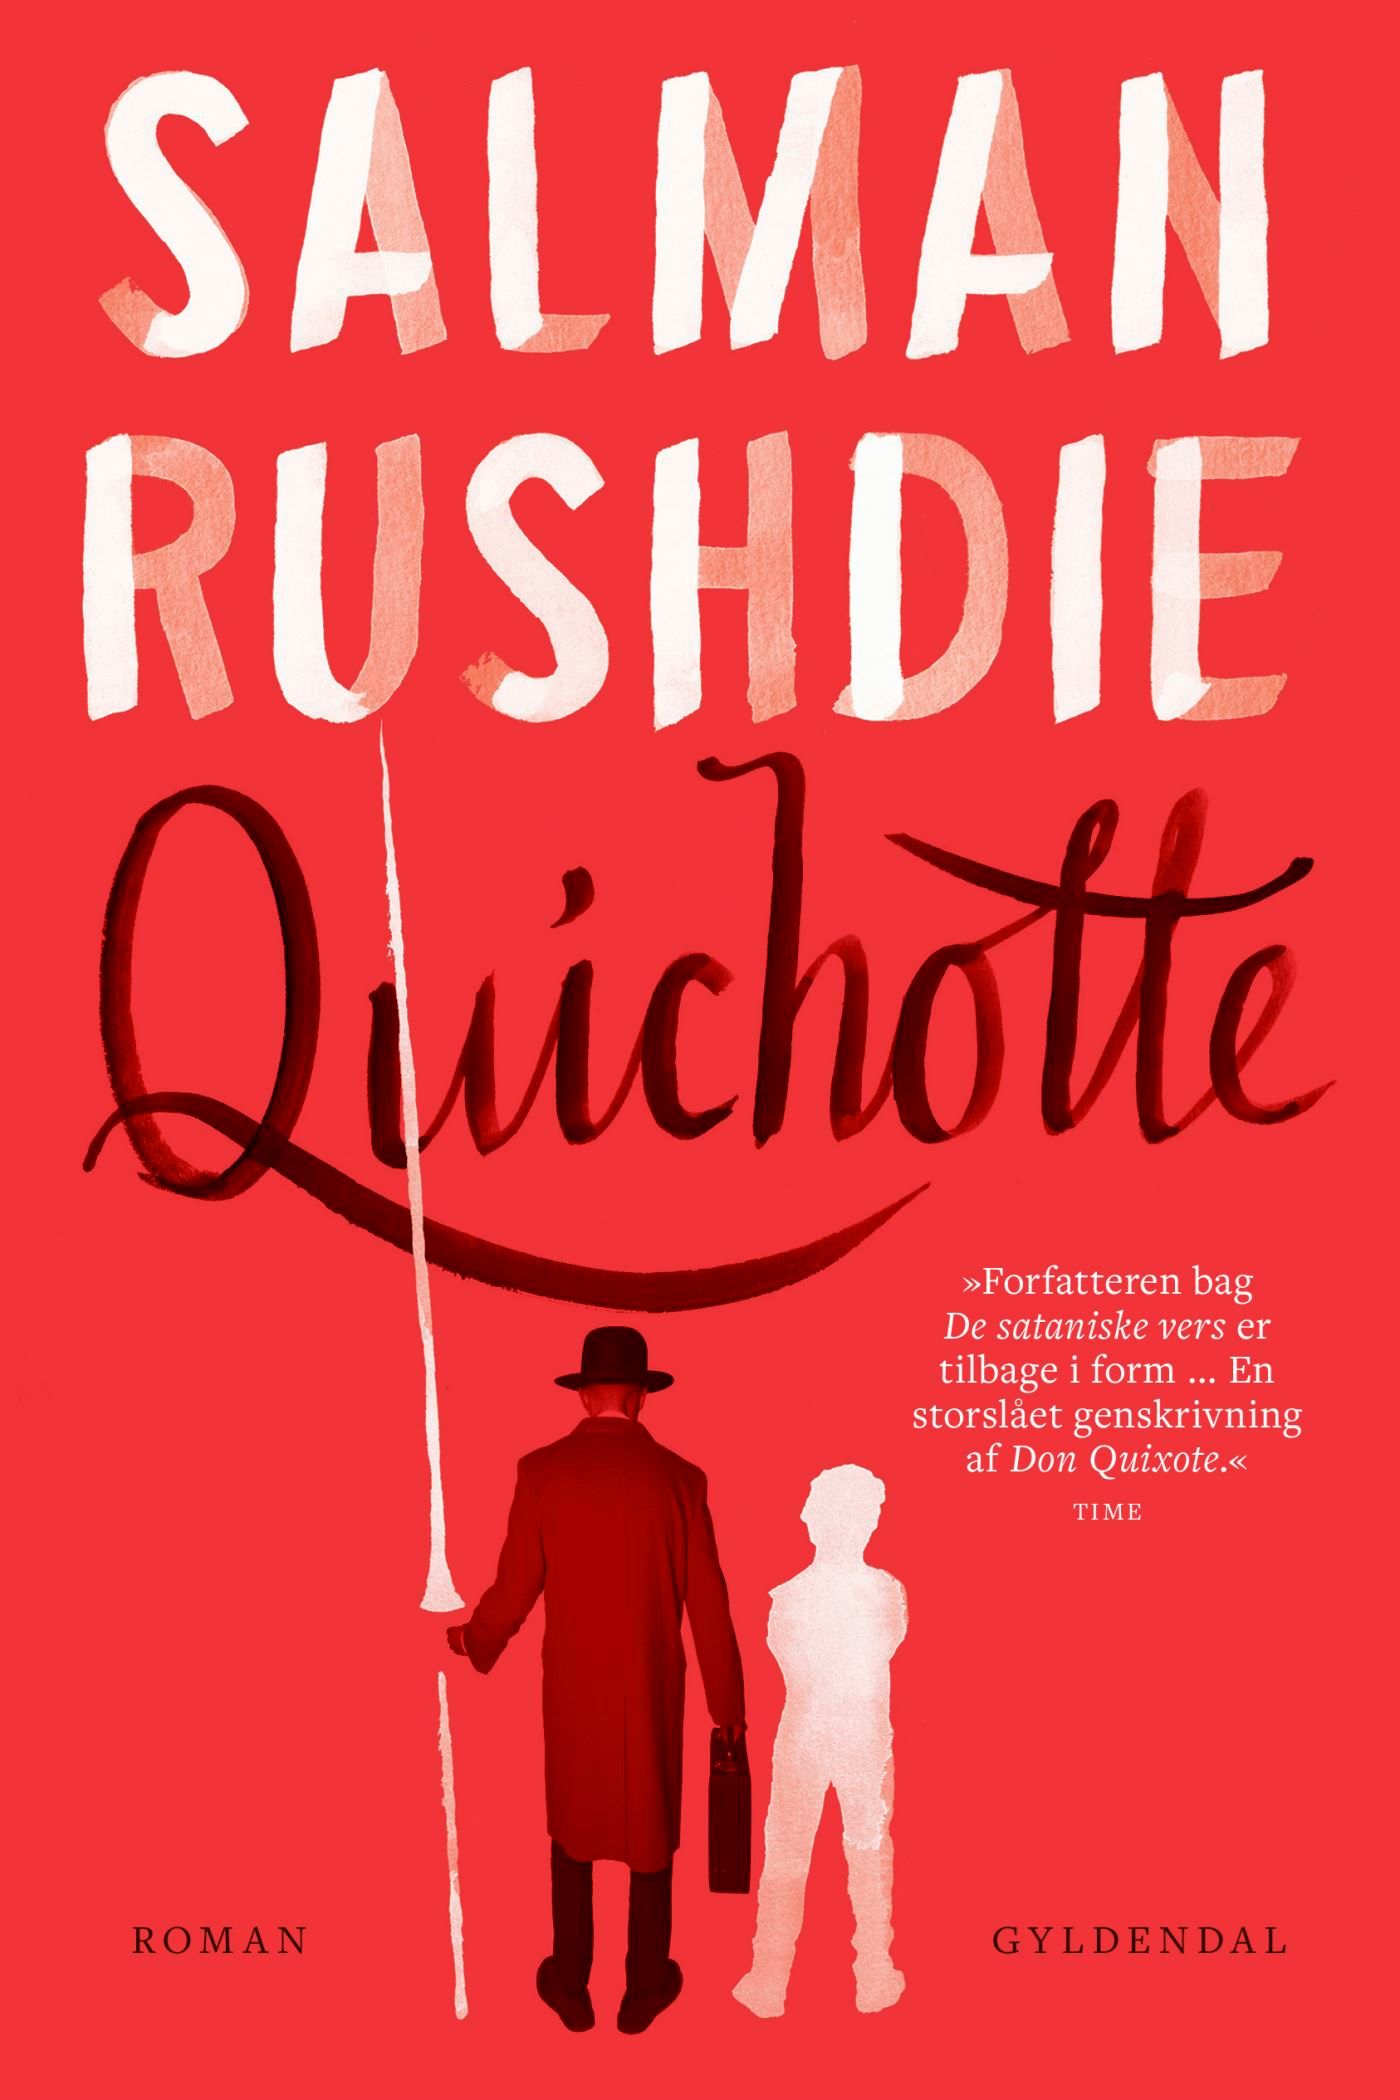 Quichotte, e-bog af Salman Rushdie